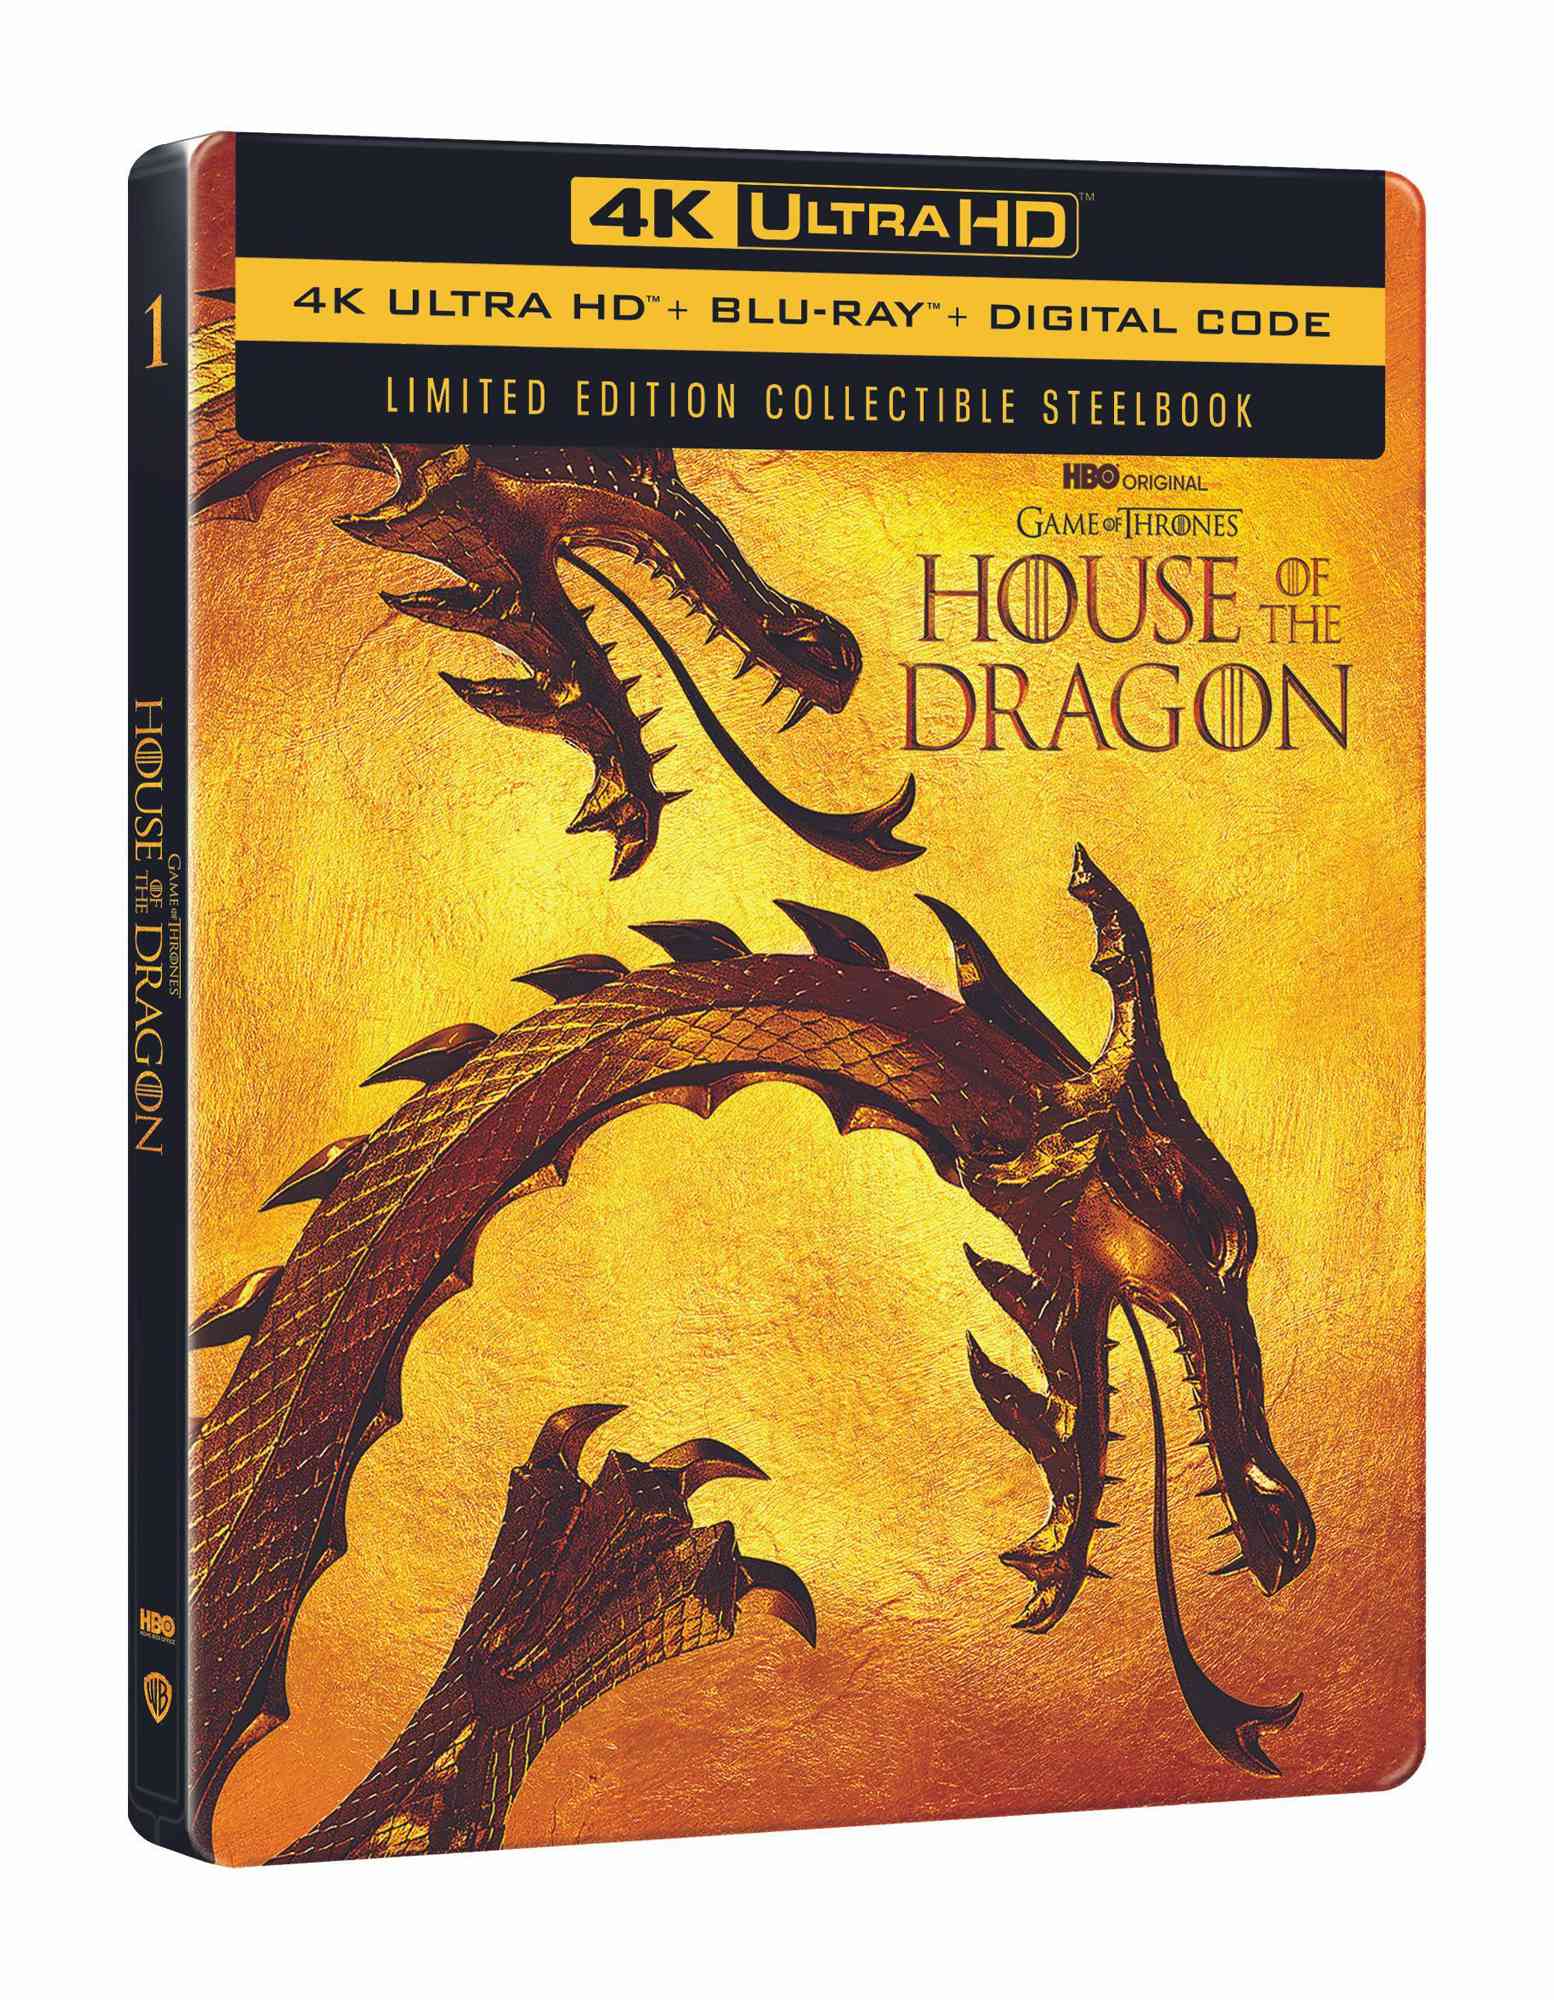 House of the Dragon DVD set